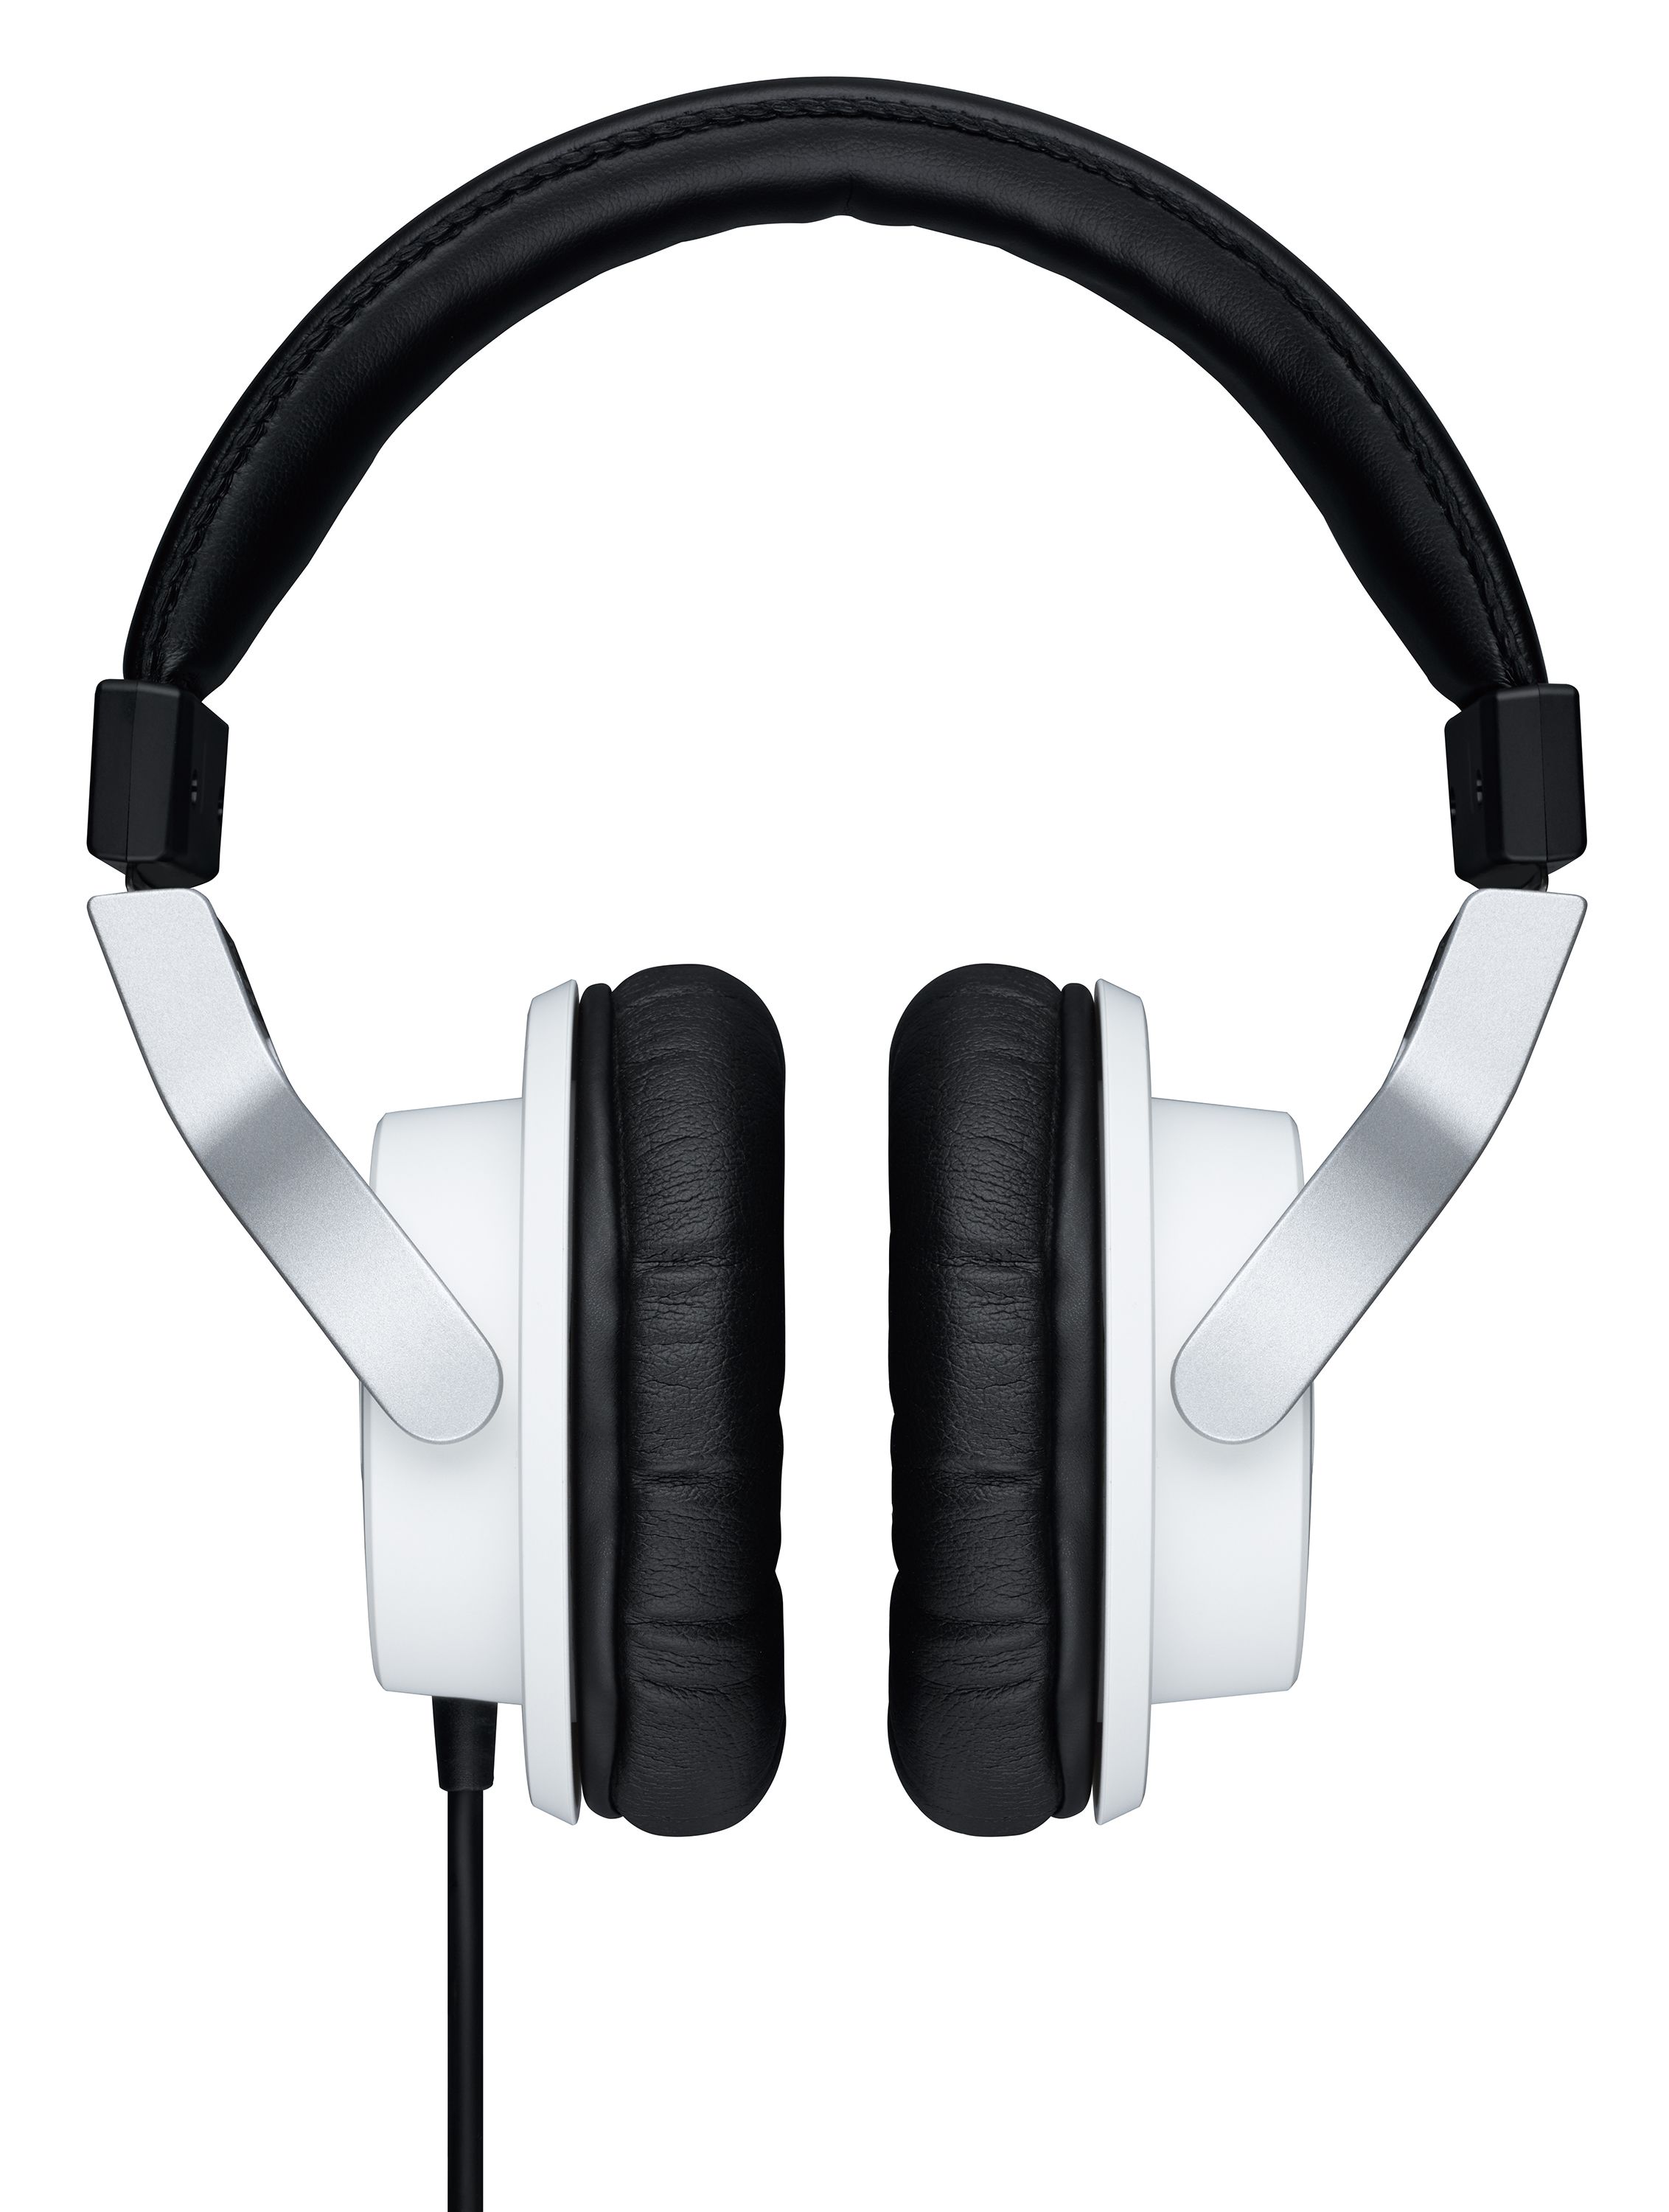 HPH-MT7W - Overview - Headphones - Professional Audio 